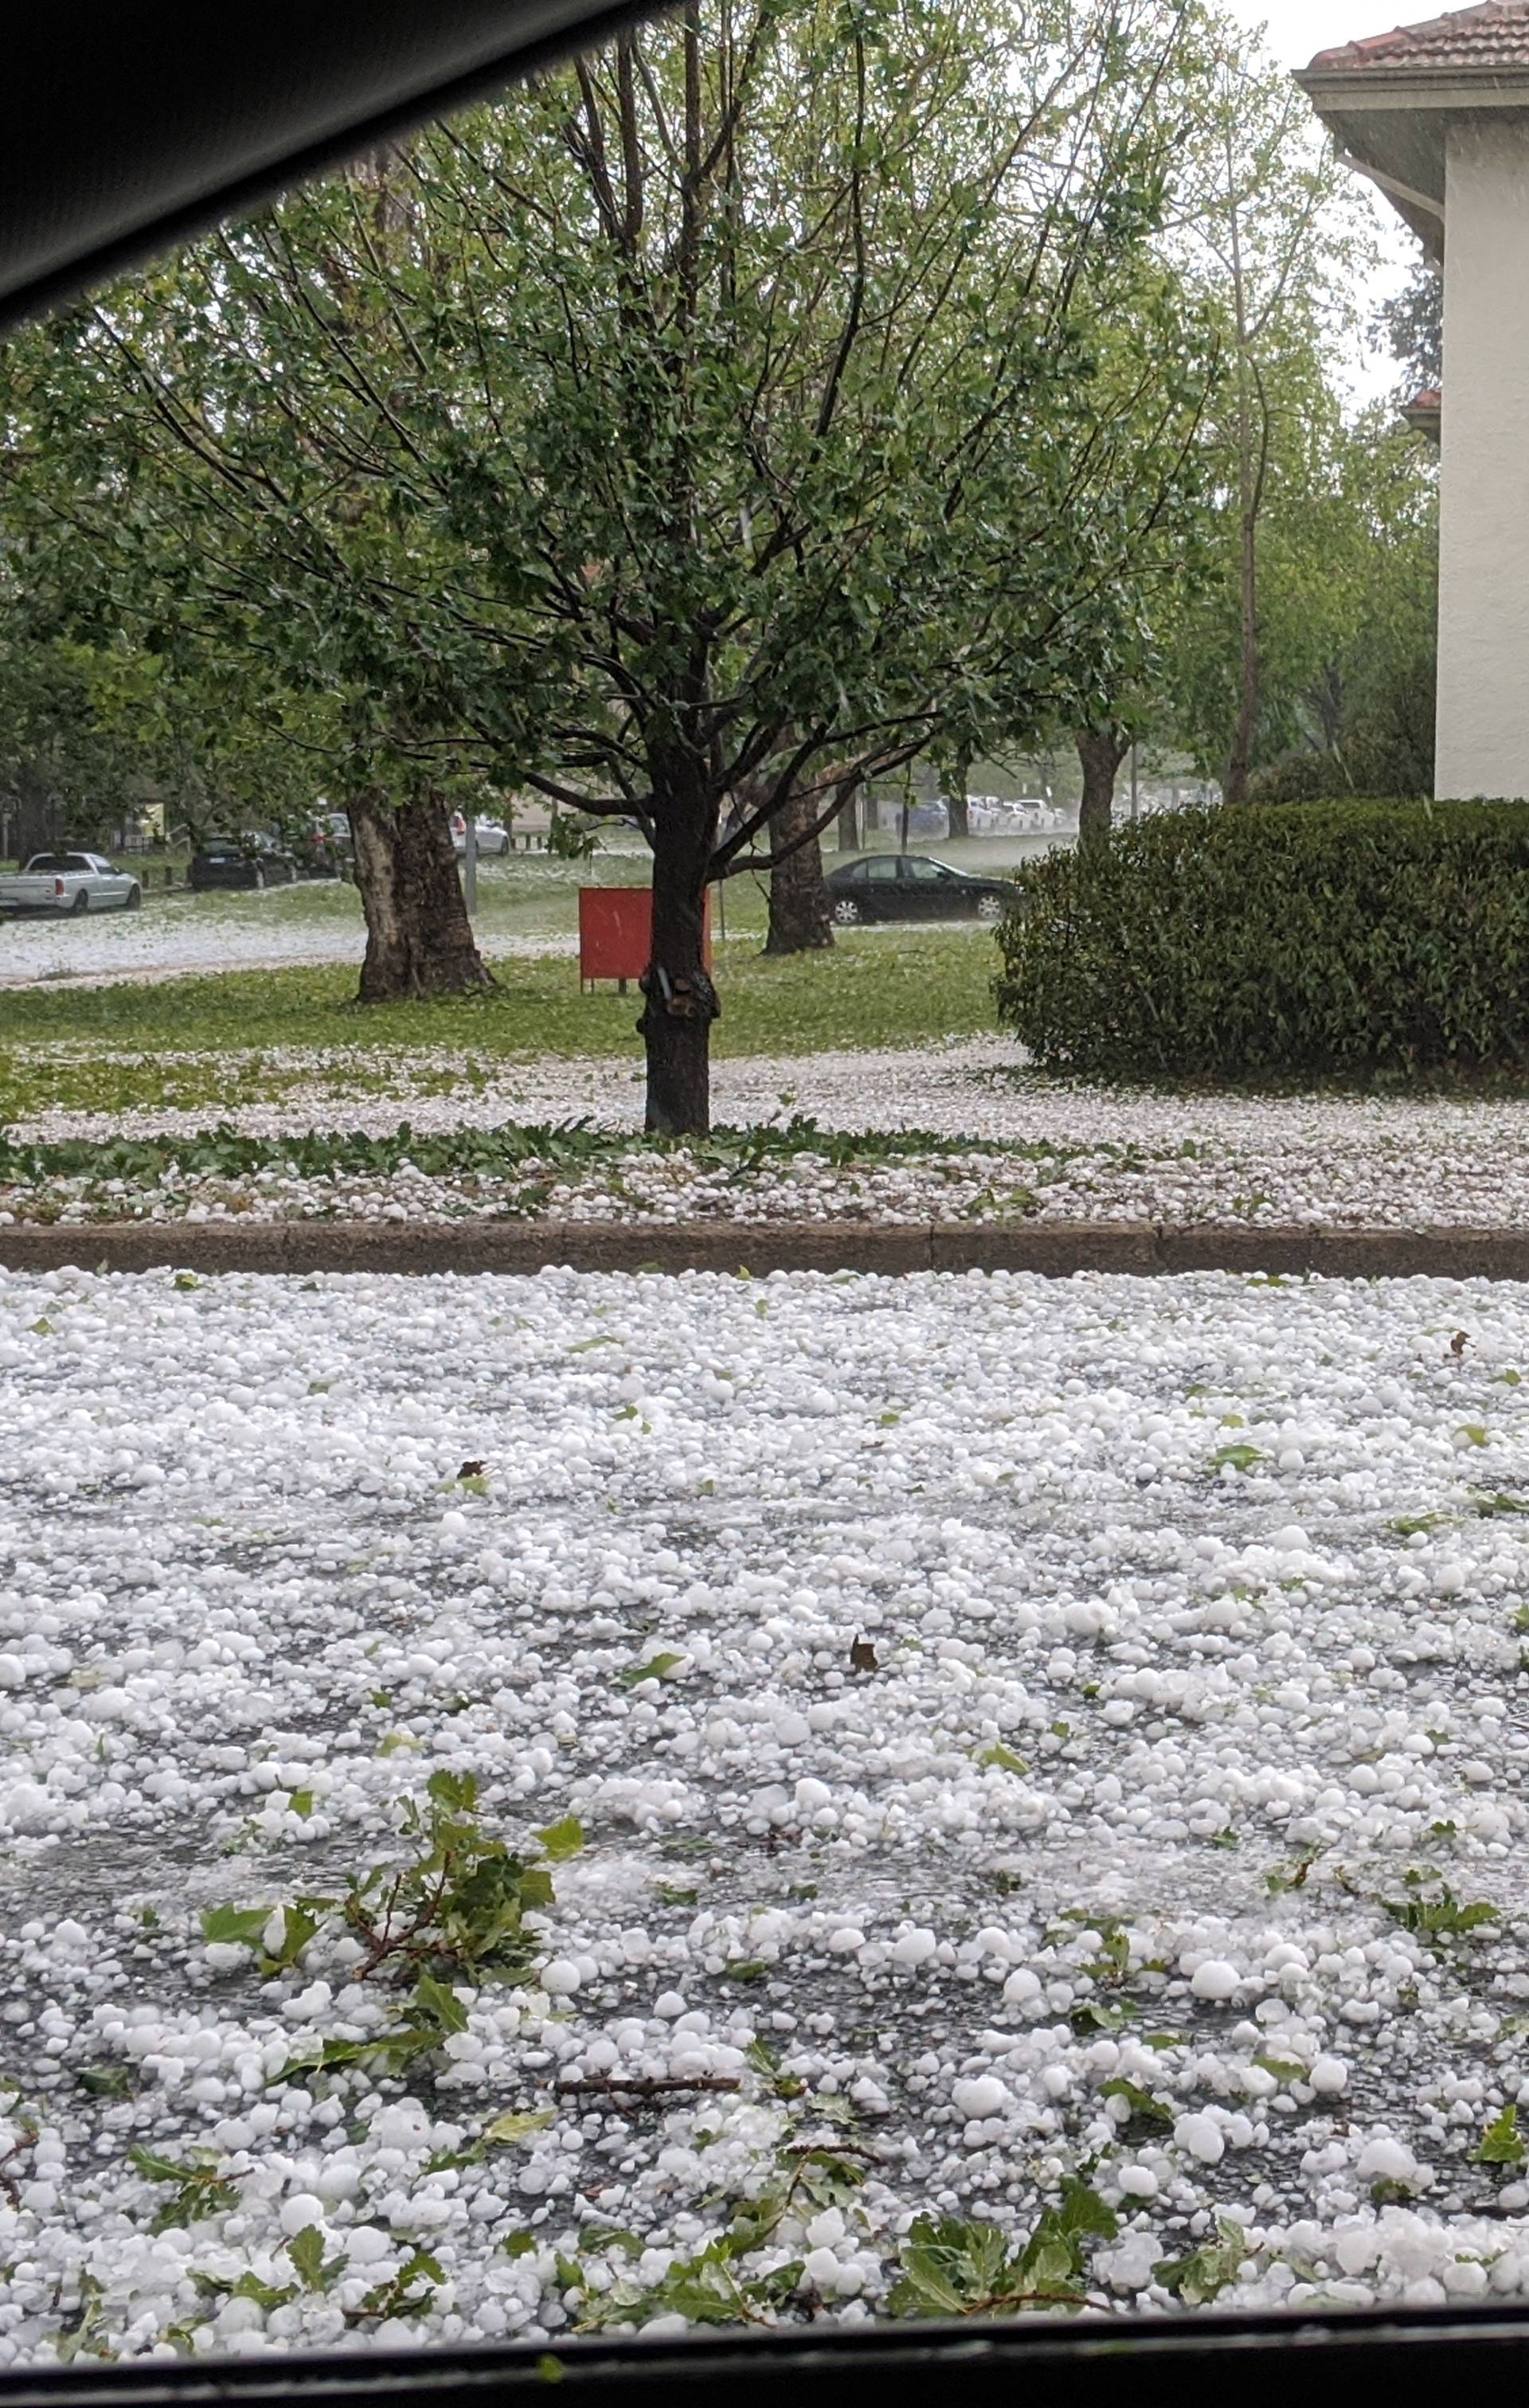 Golf ball-sized hail carpet a street after a hailstorm in Canberra